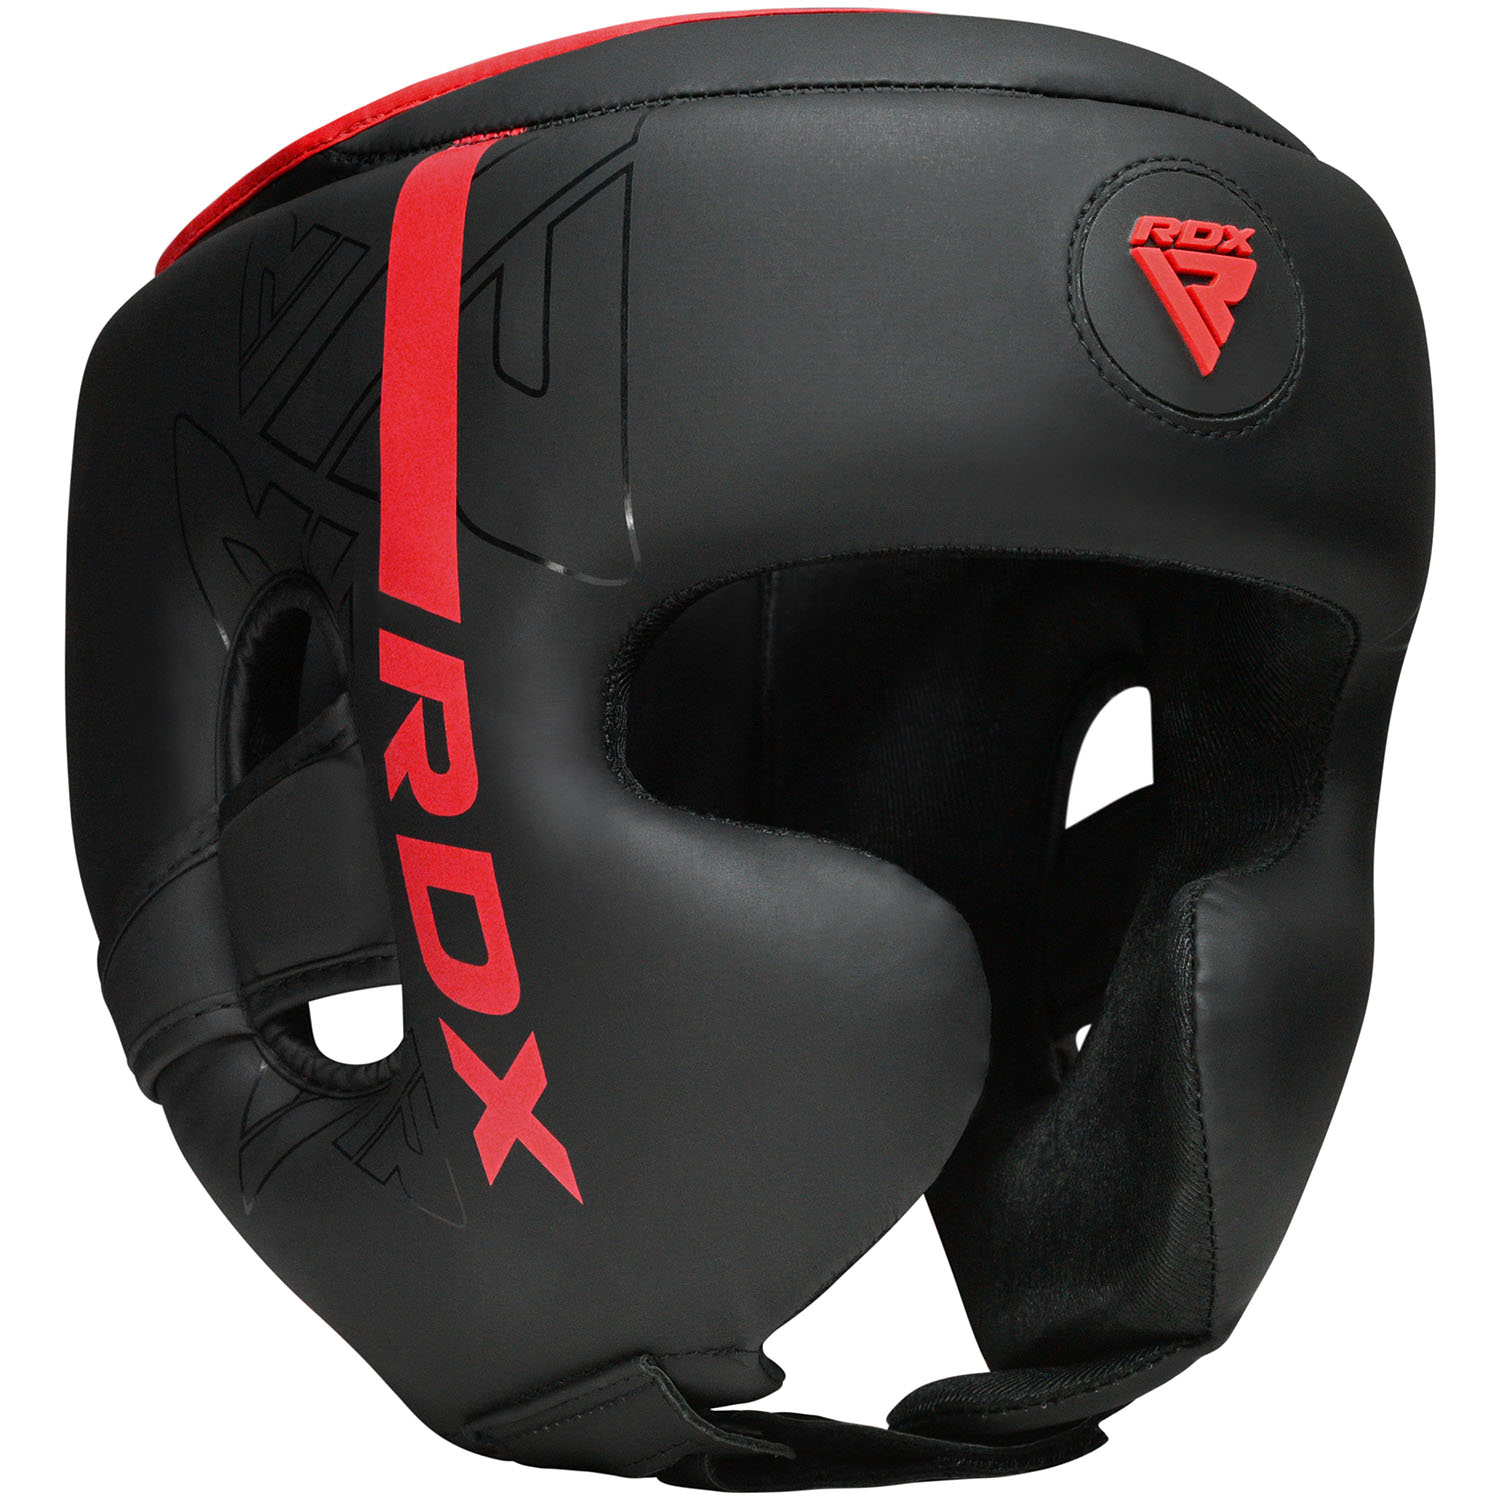 RDX Kopfschutz, Kara Series F6, schwarz-rot, M